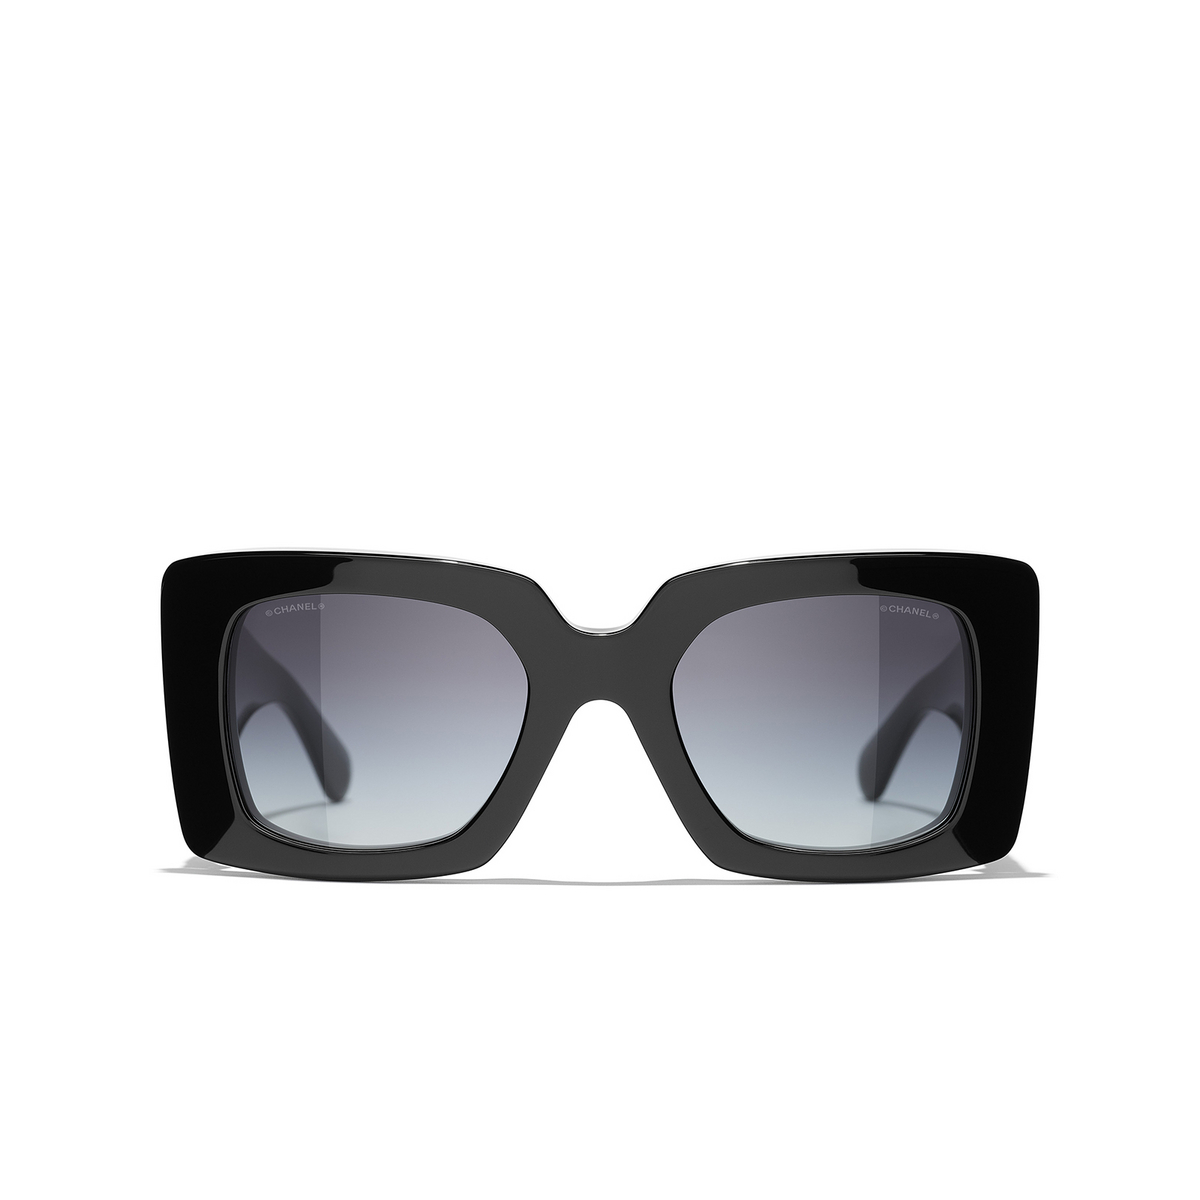 CHANEL square Sunglasses C622S6 Black & Gold - front view